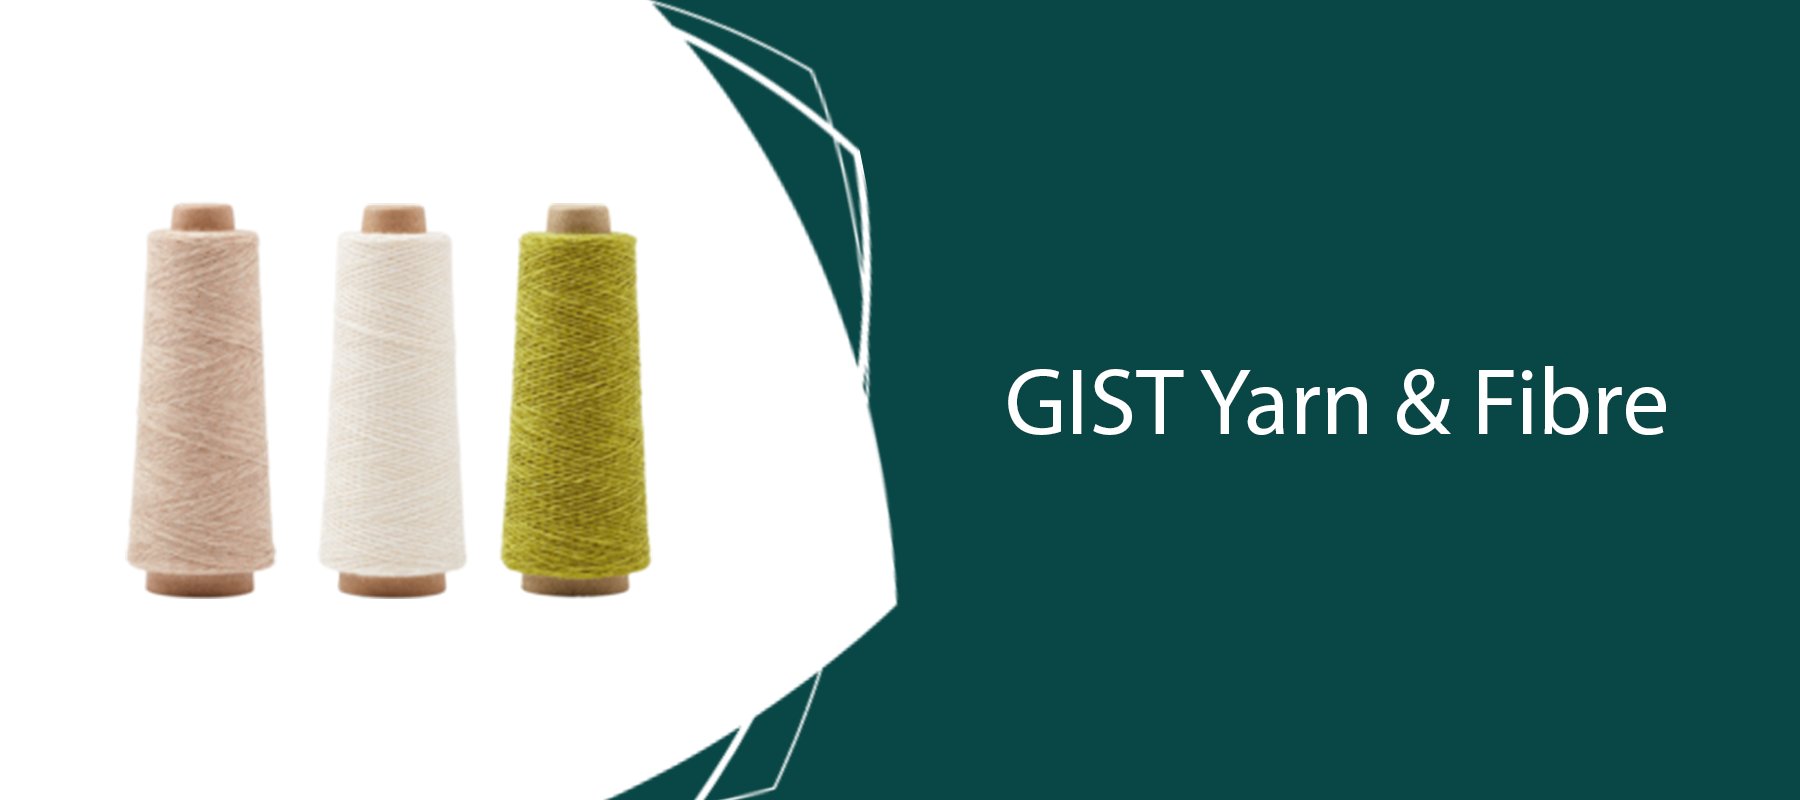 GIST Yarn & Fibre